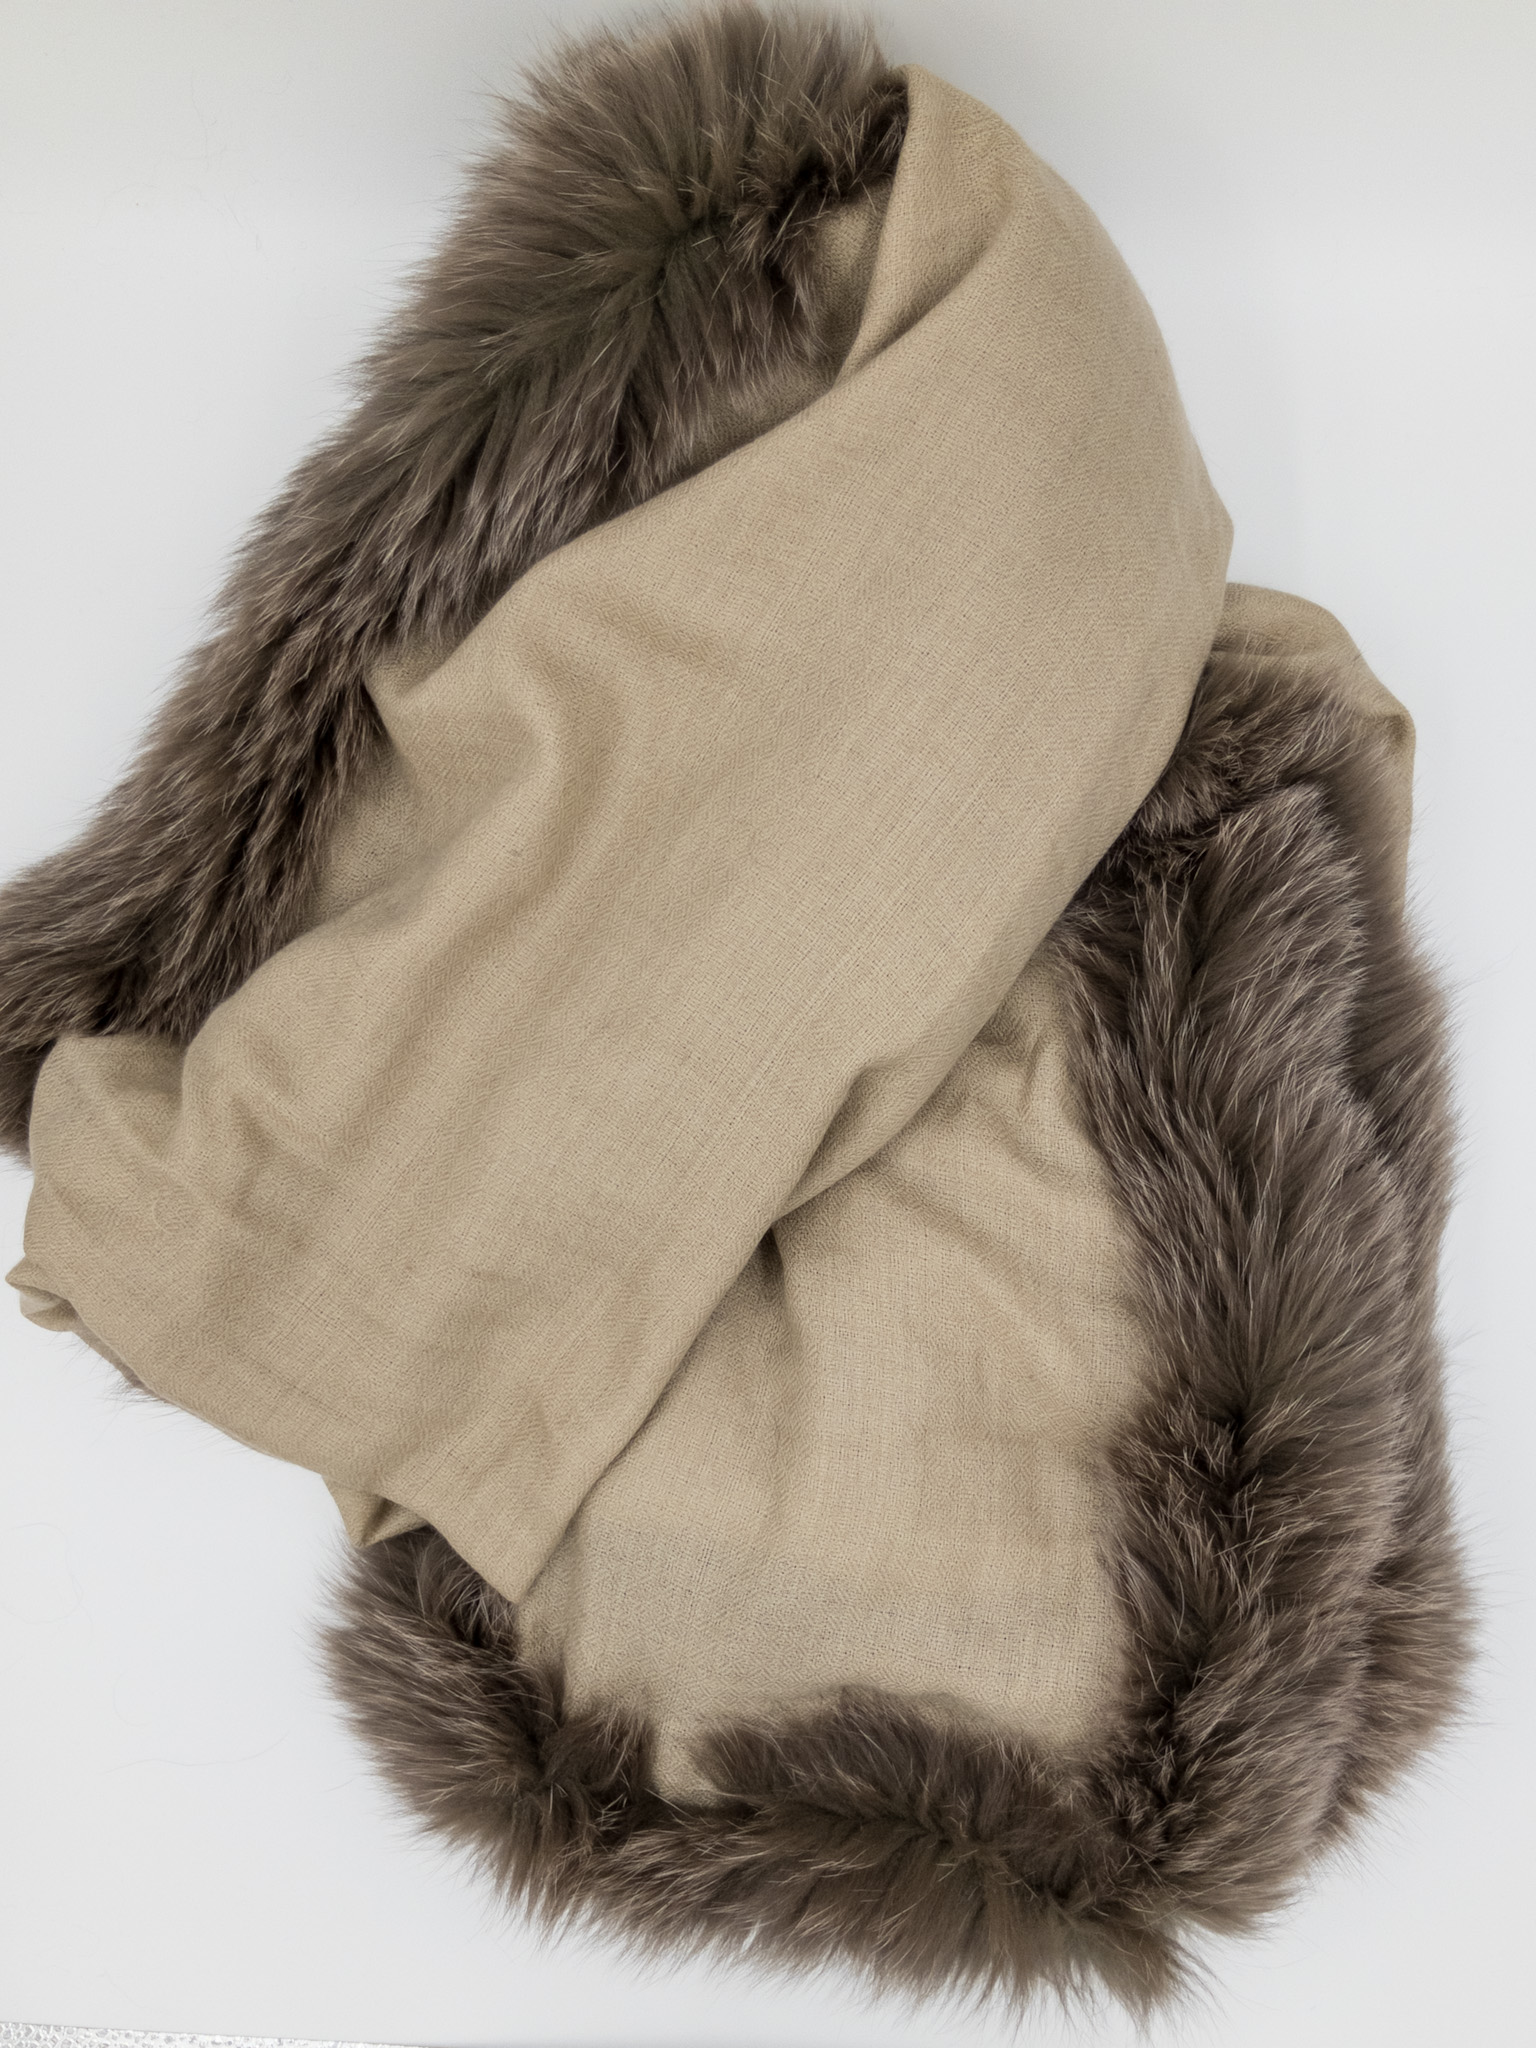 Wool Fur Trimmed Stole – Beige/Brown | Kaminee